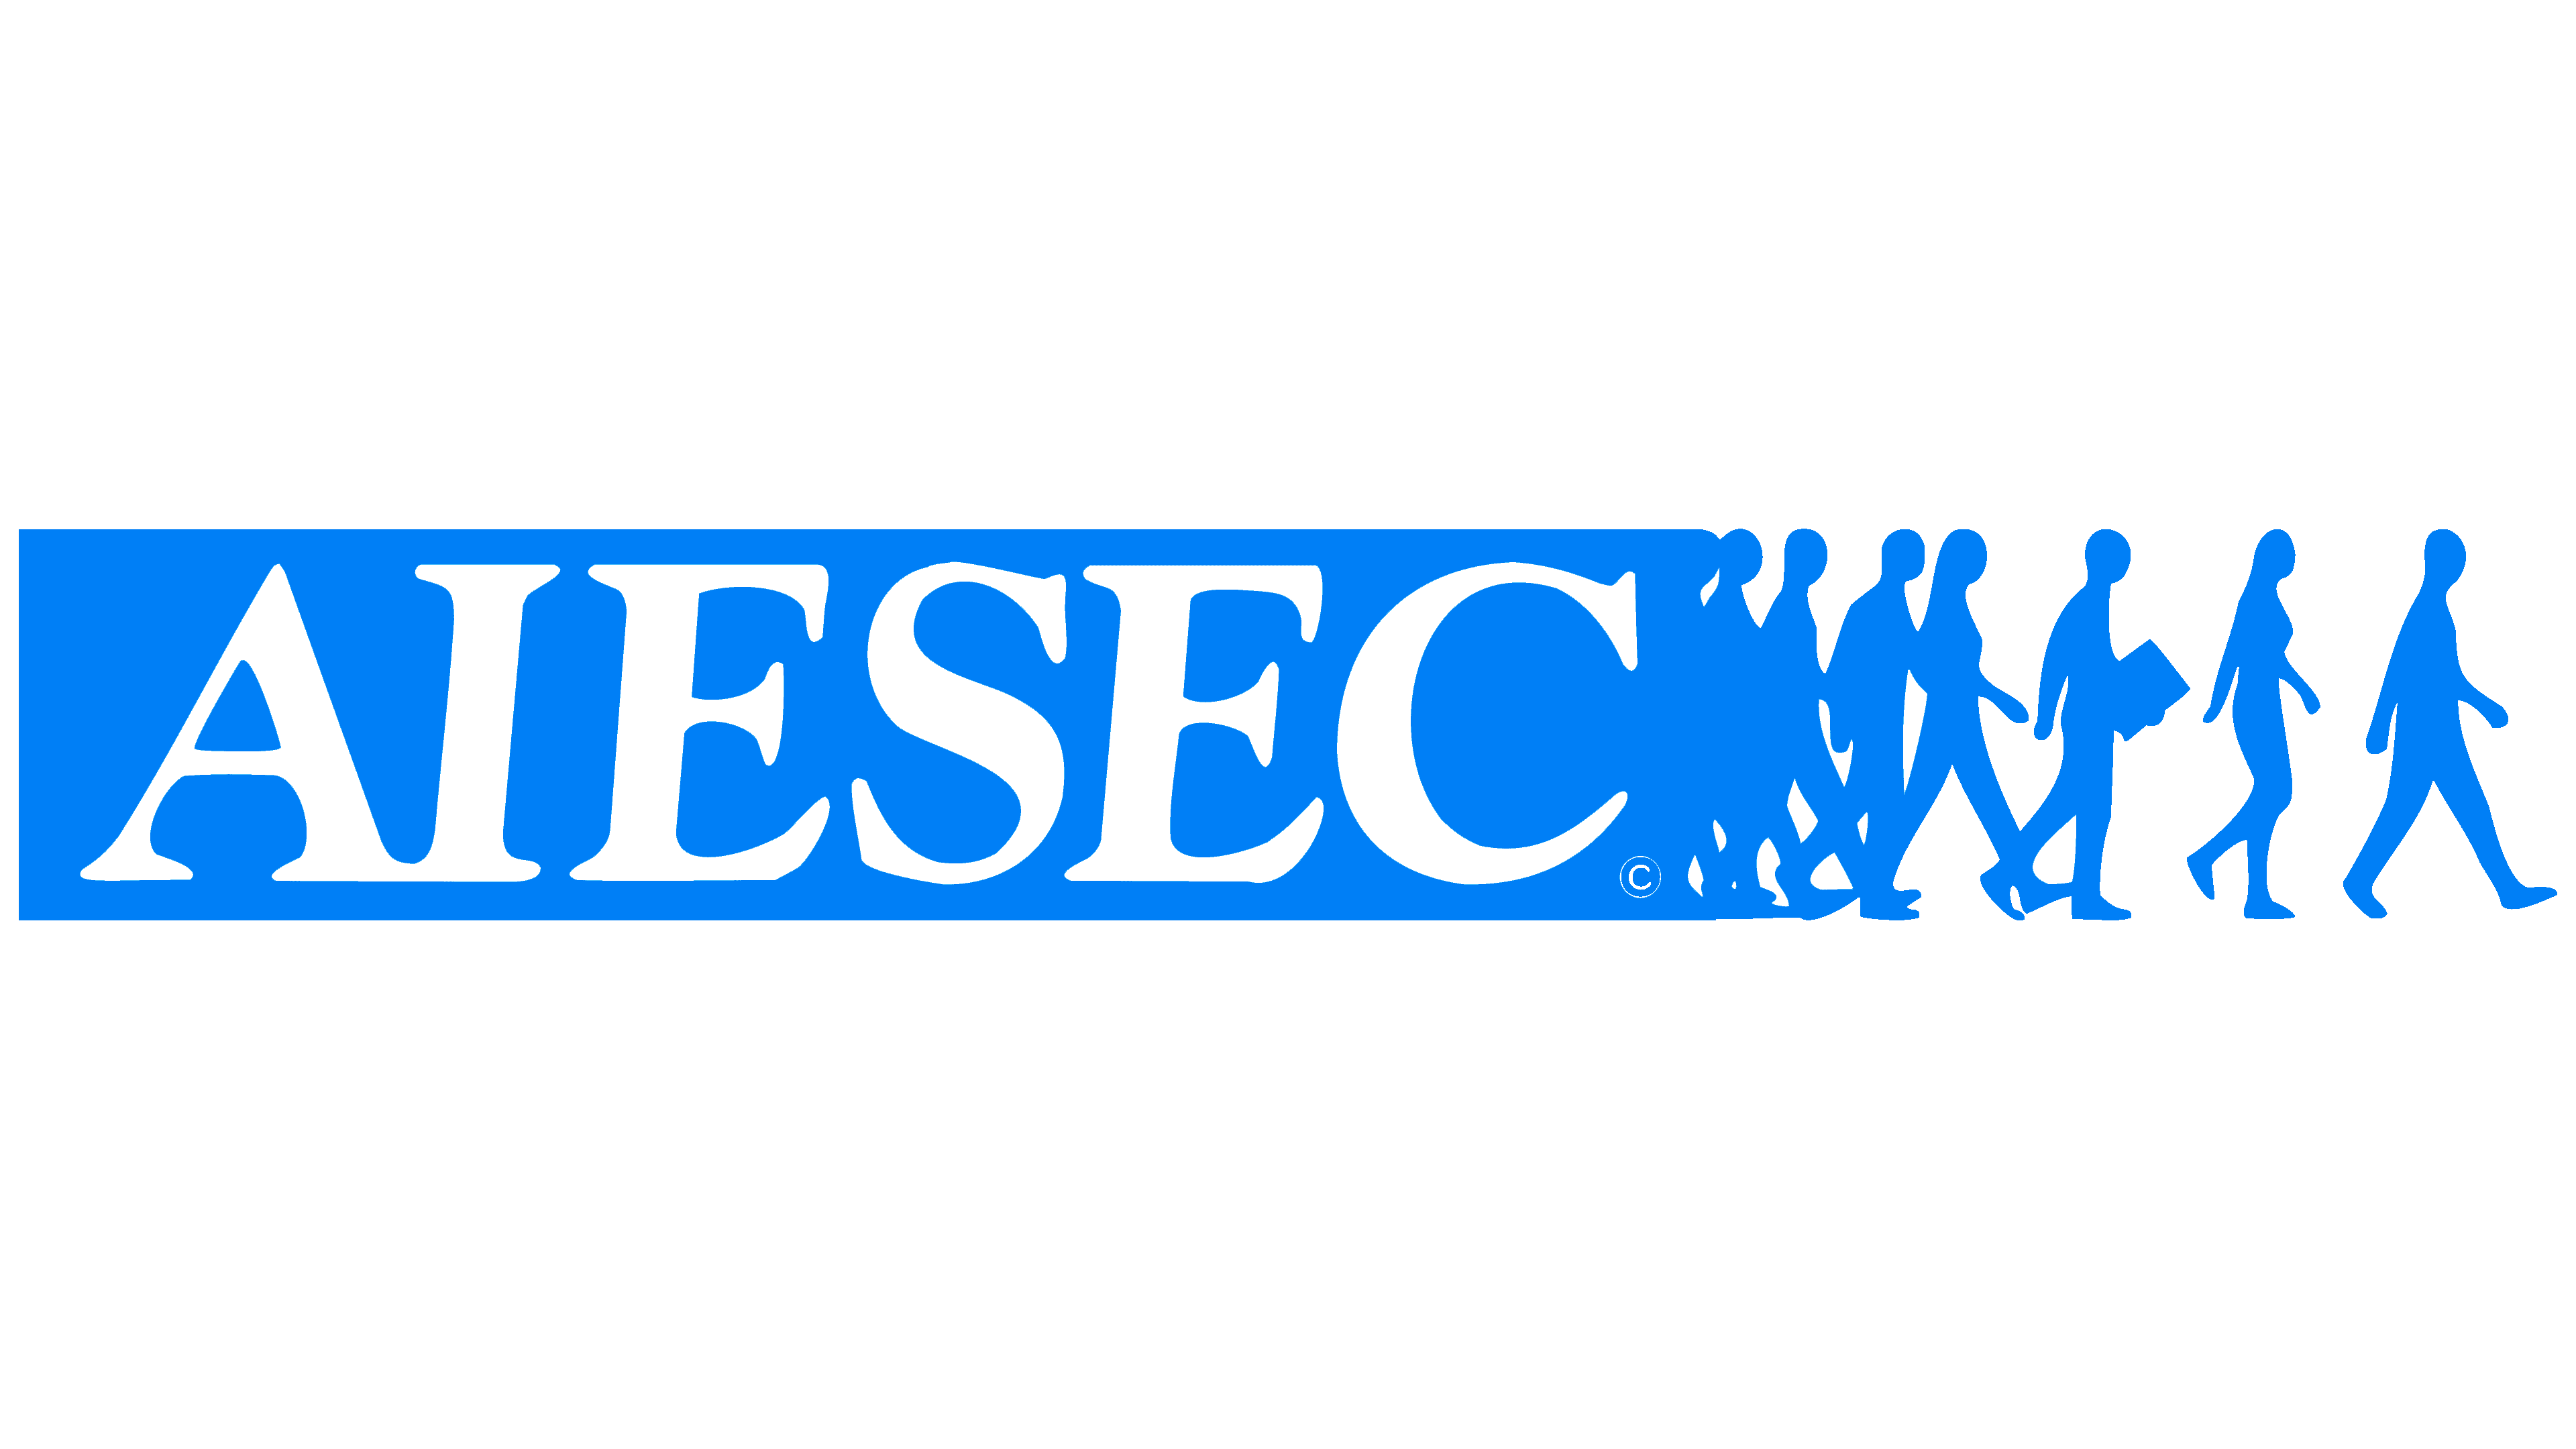 History of AIESEC by Salma El-Sahhar on Prezi